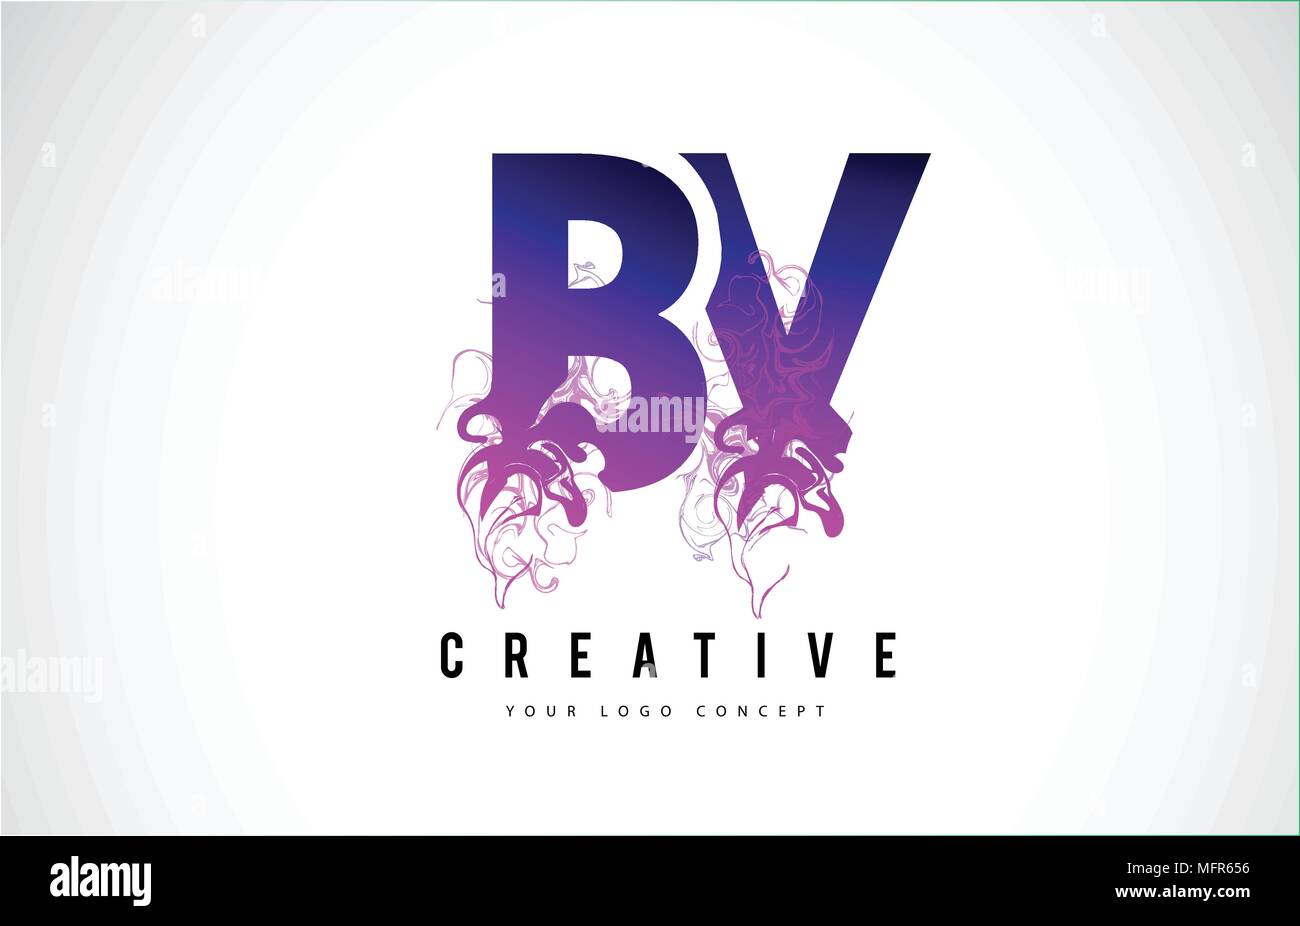 BV B V Lettre Violet Logo Design créatif avec effet liquide Vector Illustration. Illustration de Vecteur